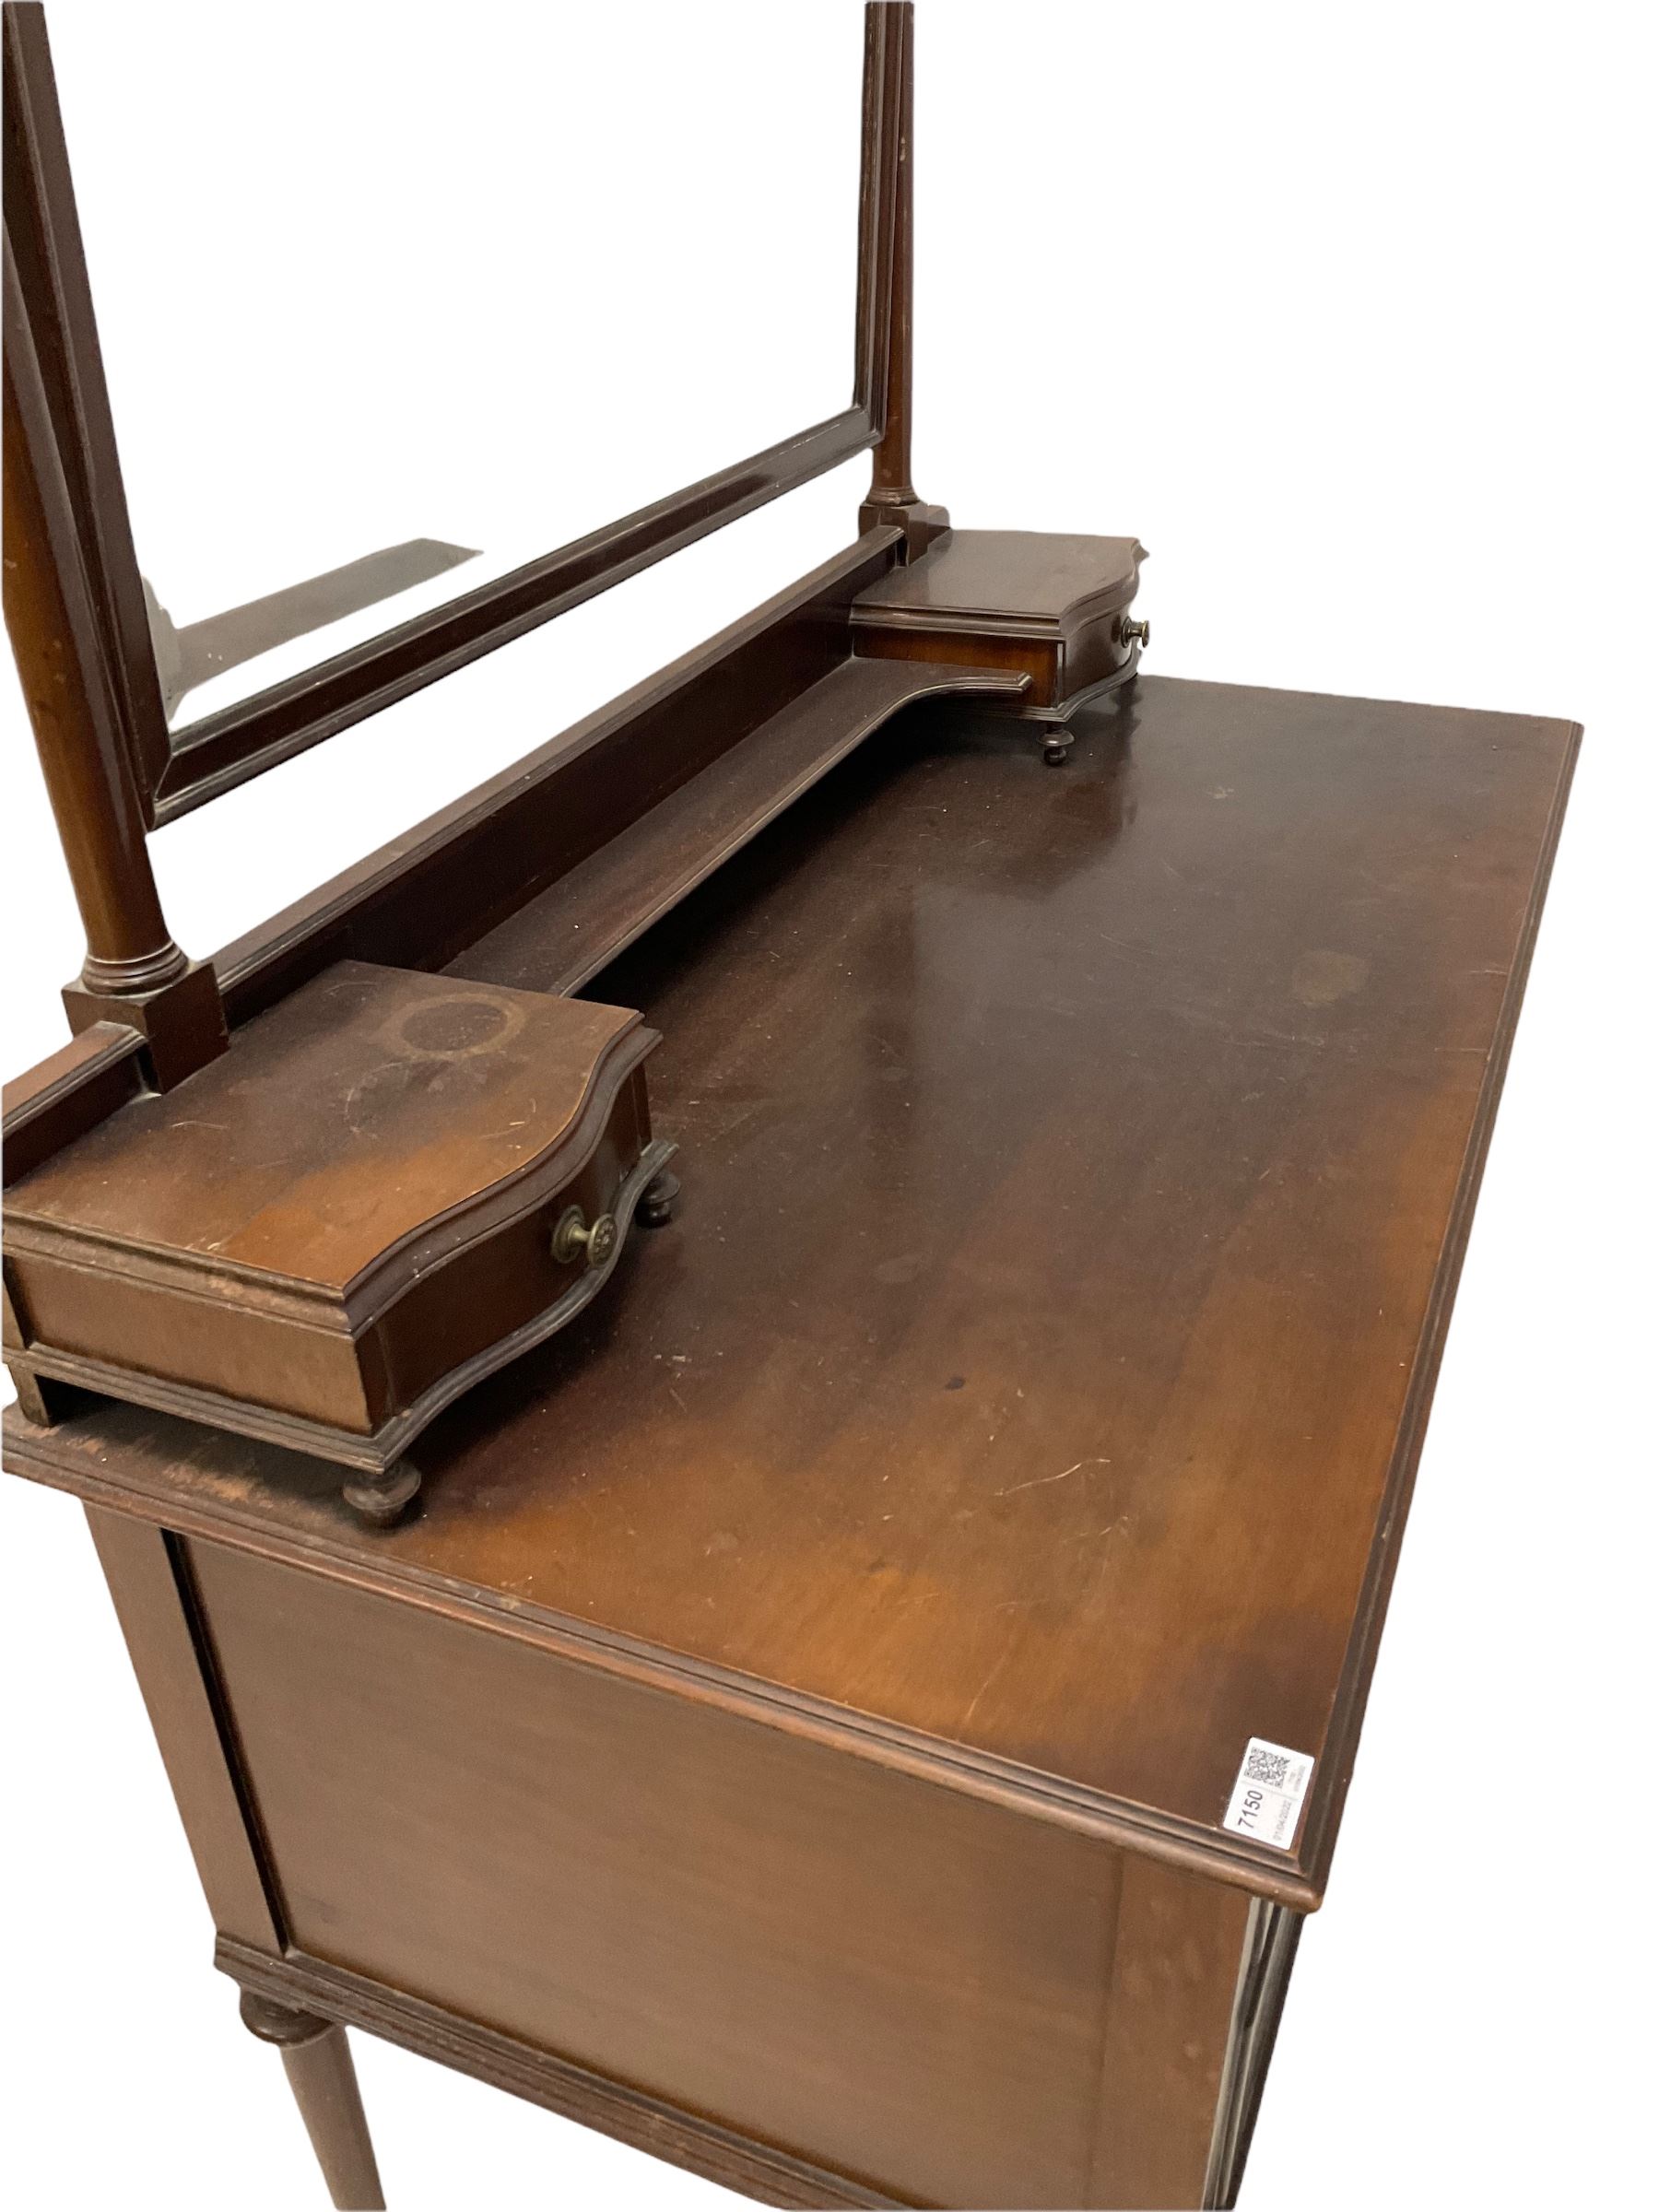 20th century mahogany mirror back dressing chest - Image 3 of 3